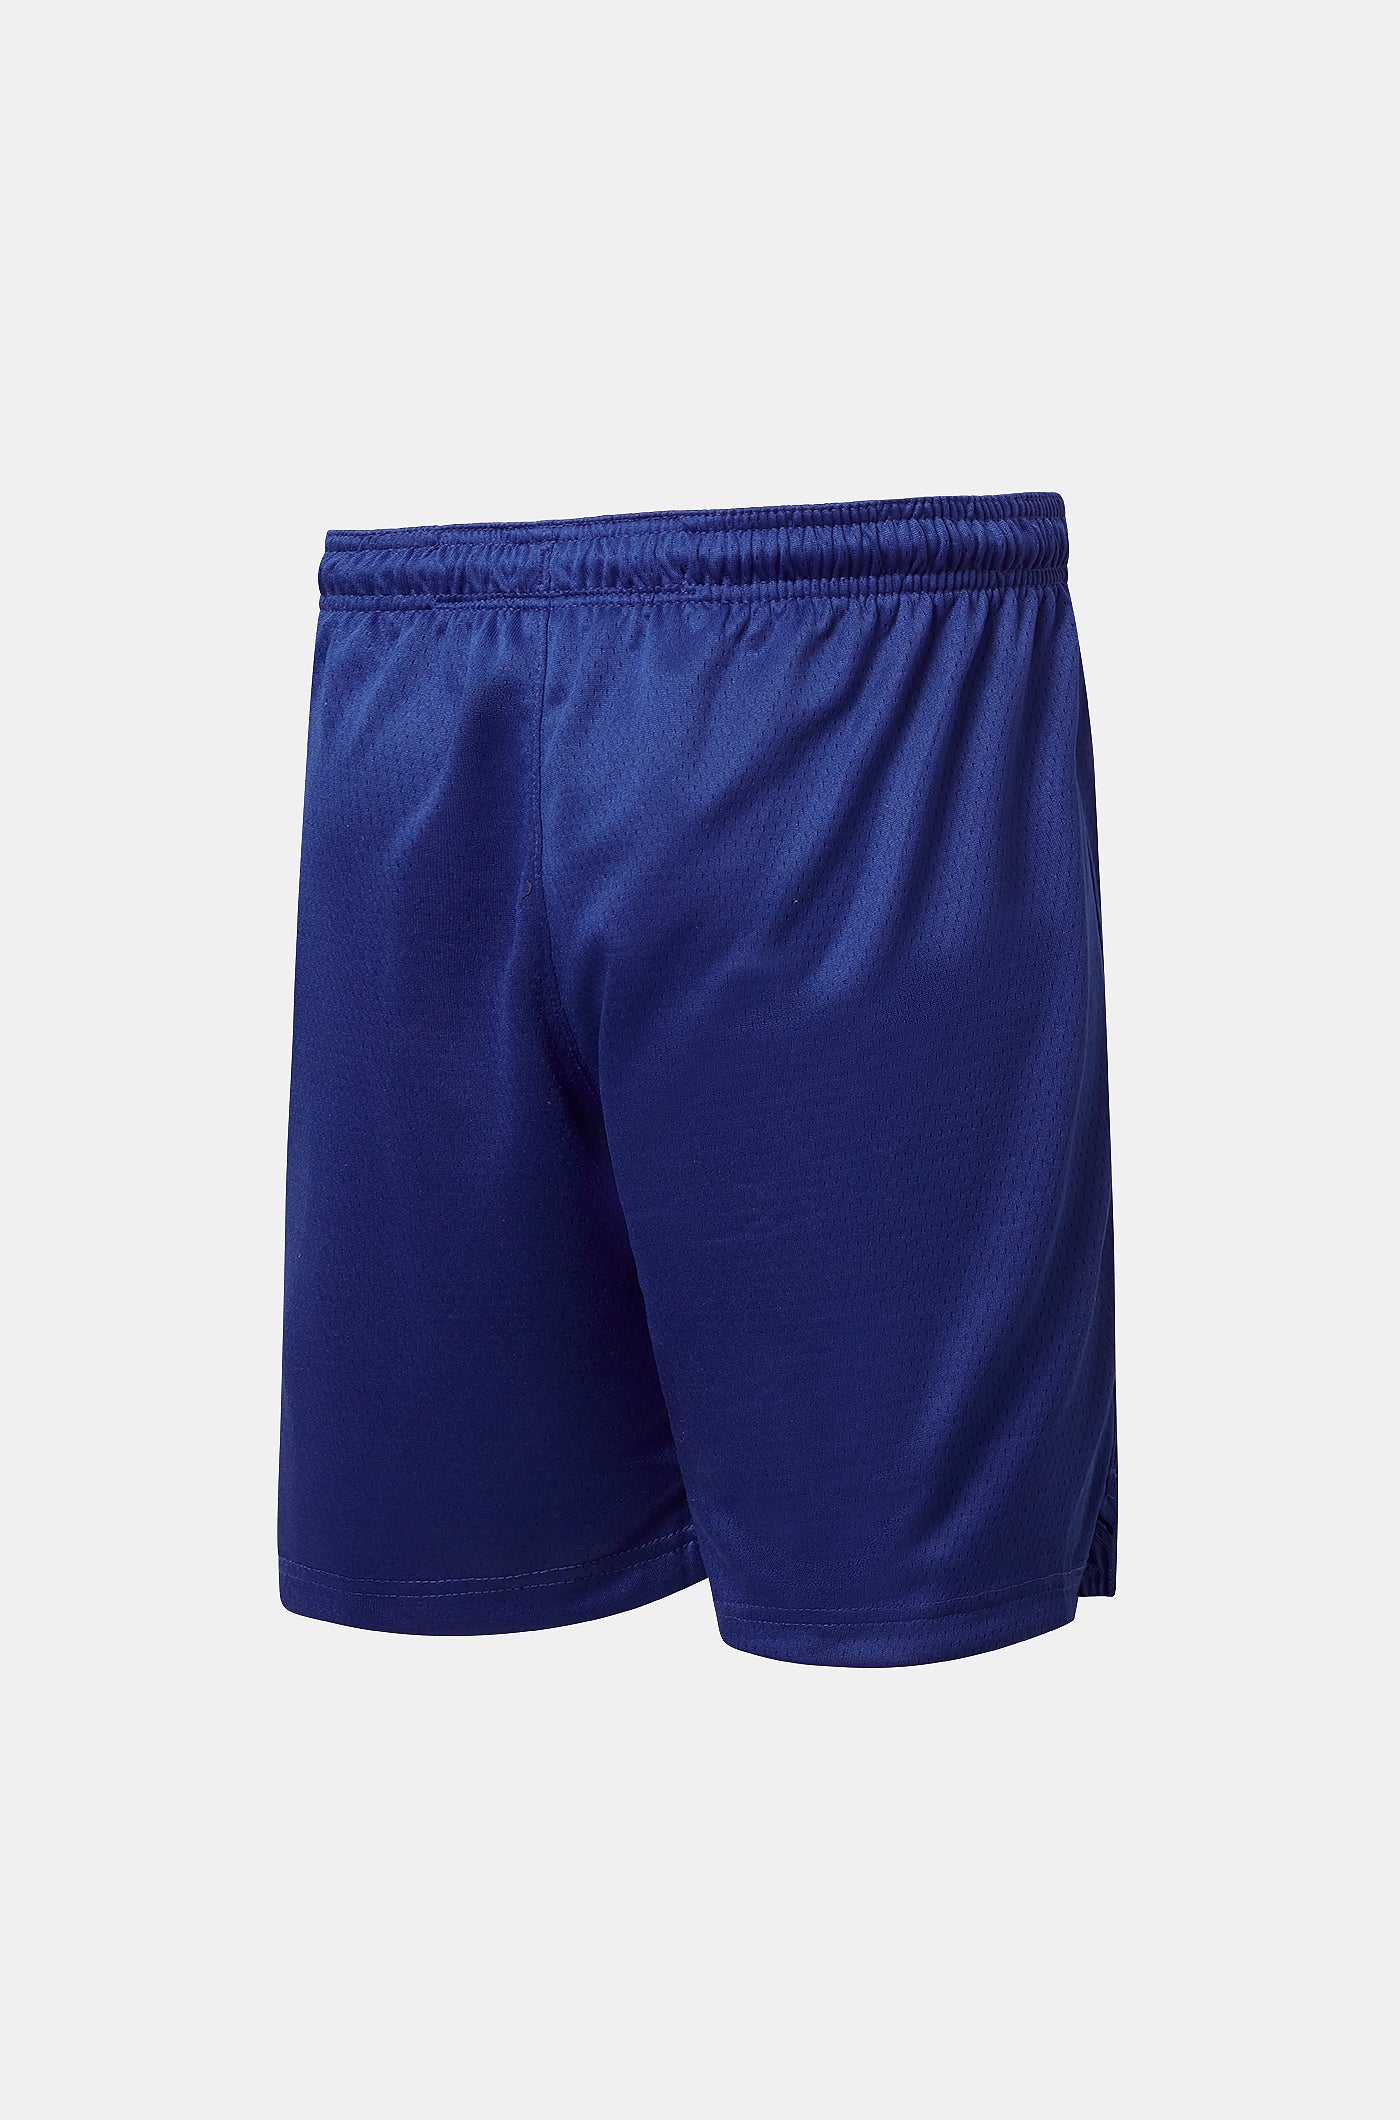 Home Kit Basketball Shorts – Junior – Barça Official Store Spotify Camp Nou